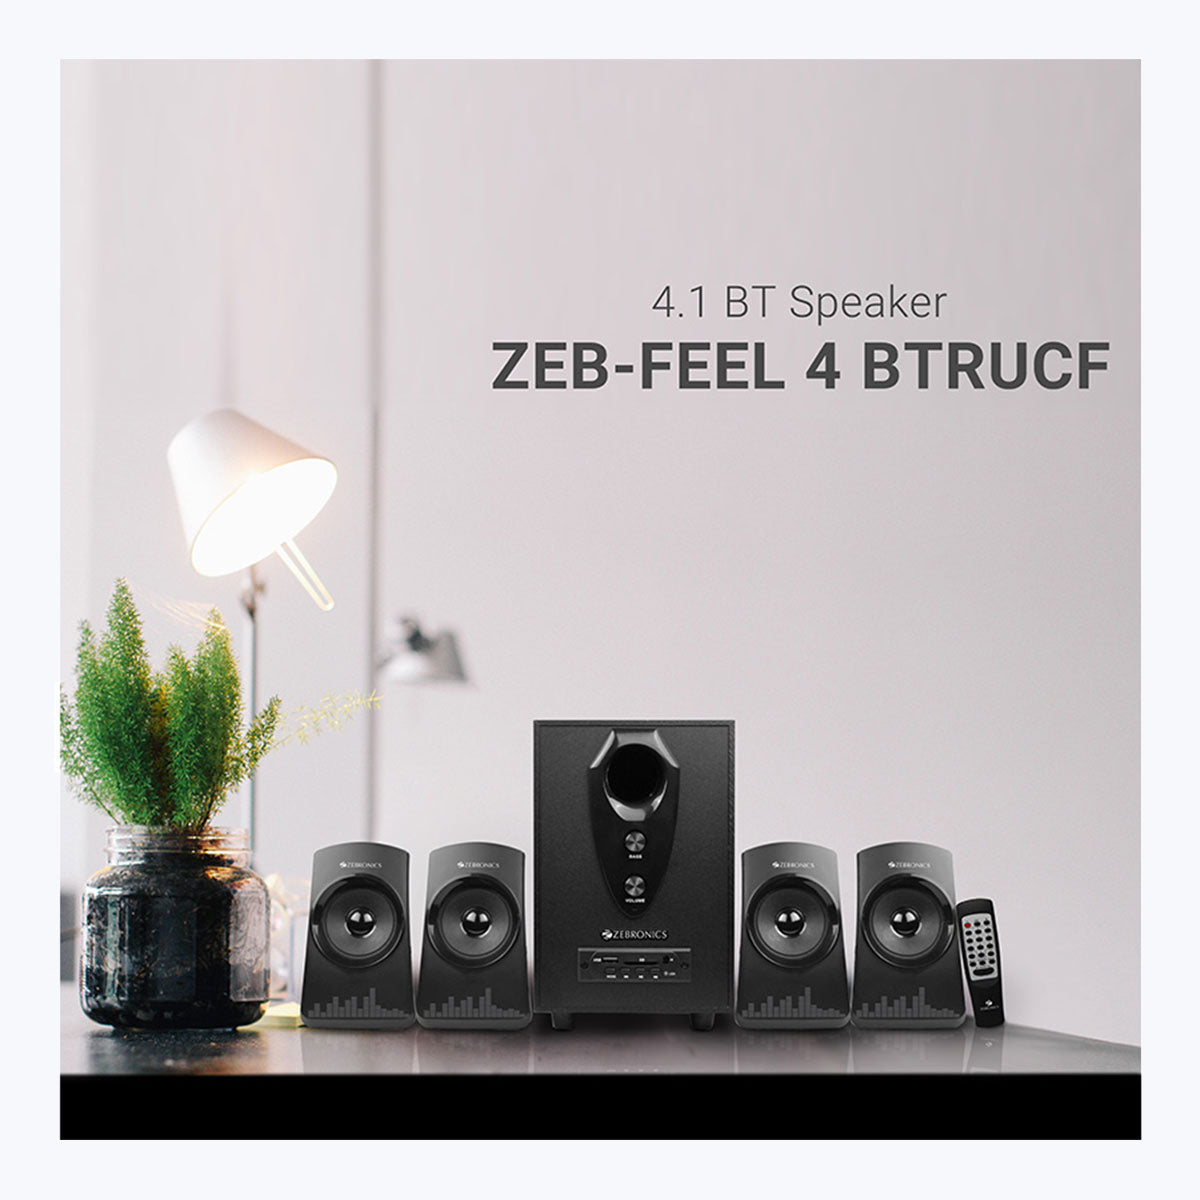 Zeb-Feel 4 BTRUCF - 4.1 Speaker - Zebronics